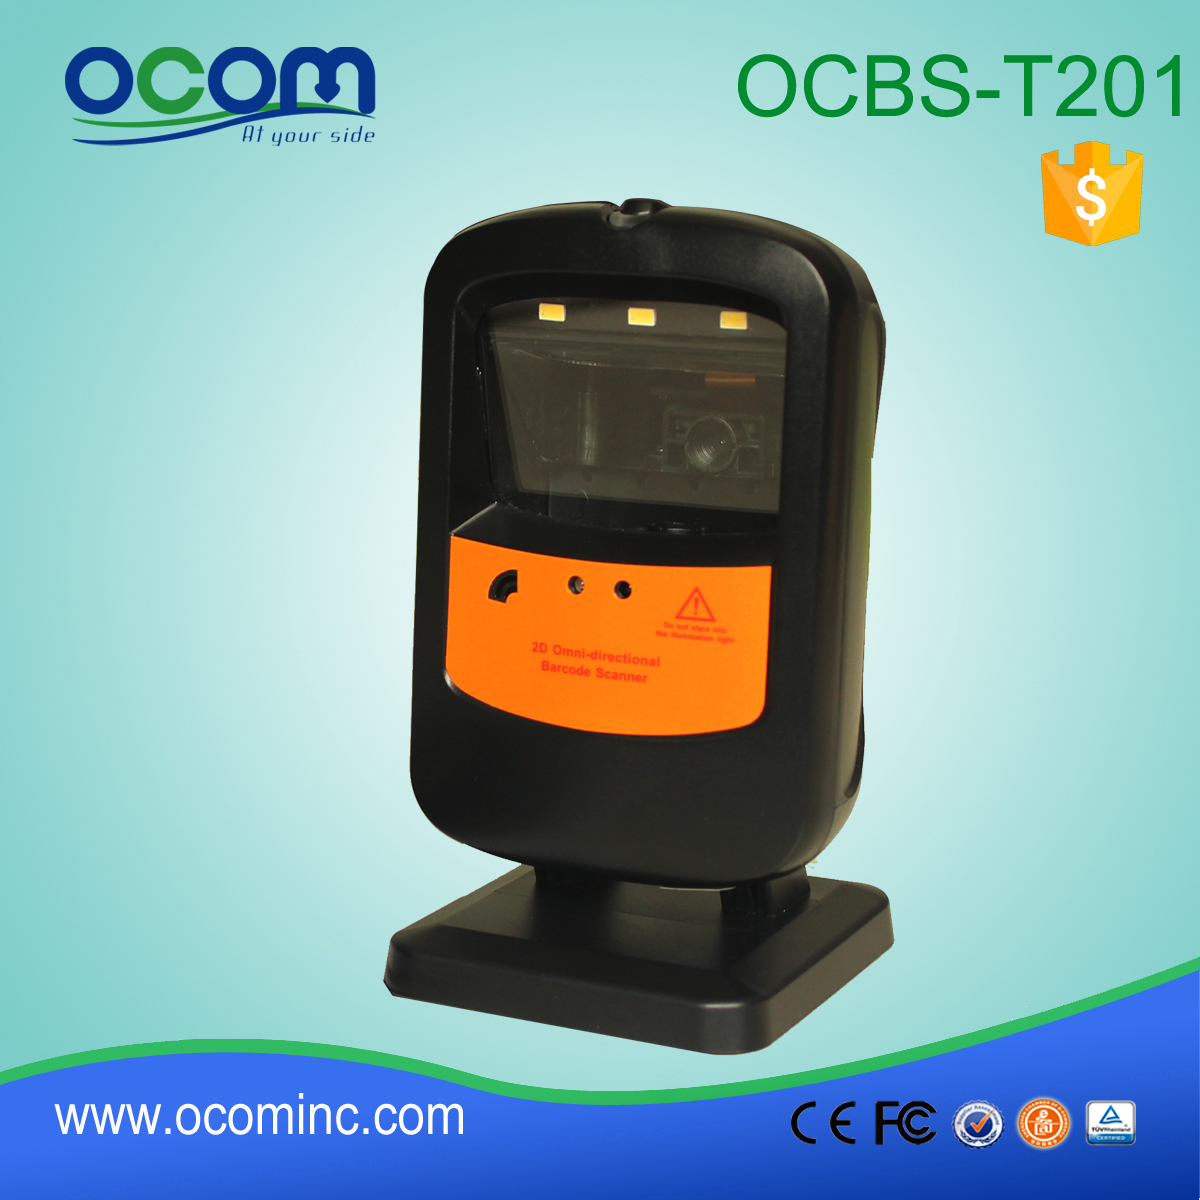 OCBs-T201: καρότσα τιμή σαρωτή γραμμωτού κώδικα, barcode scanner Κίνα